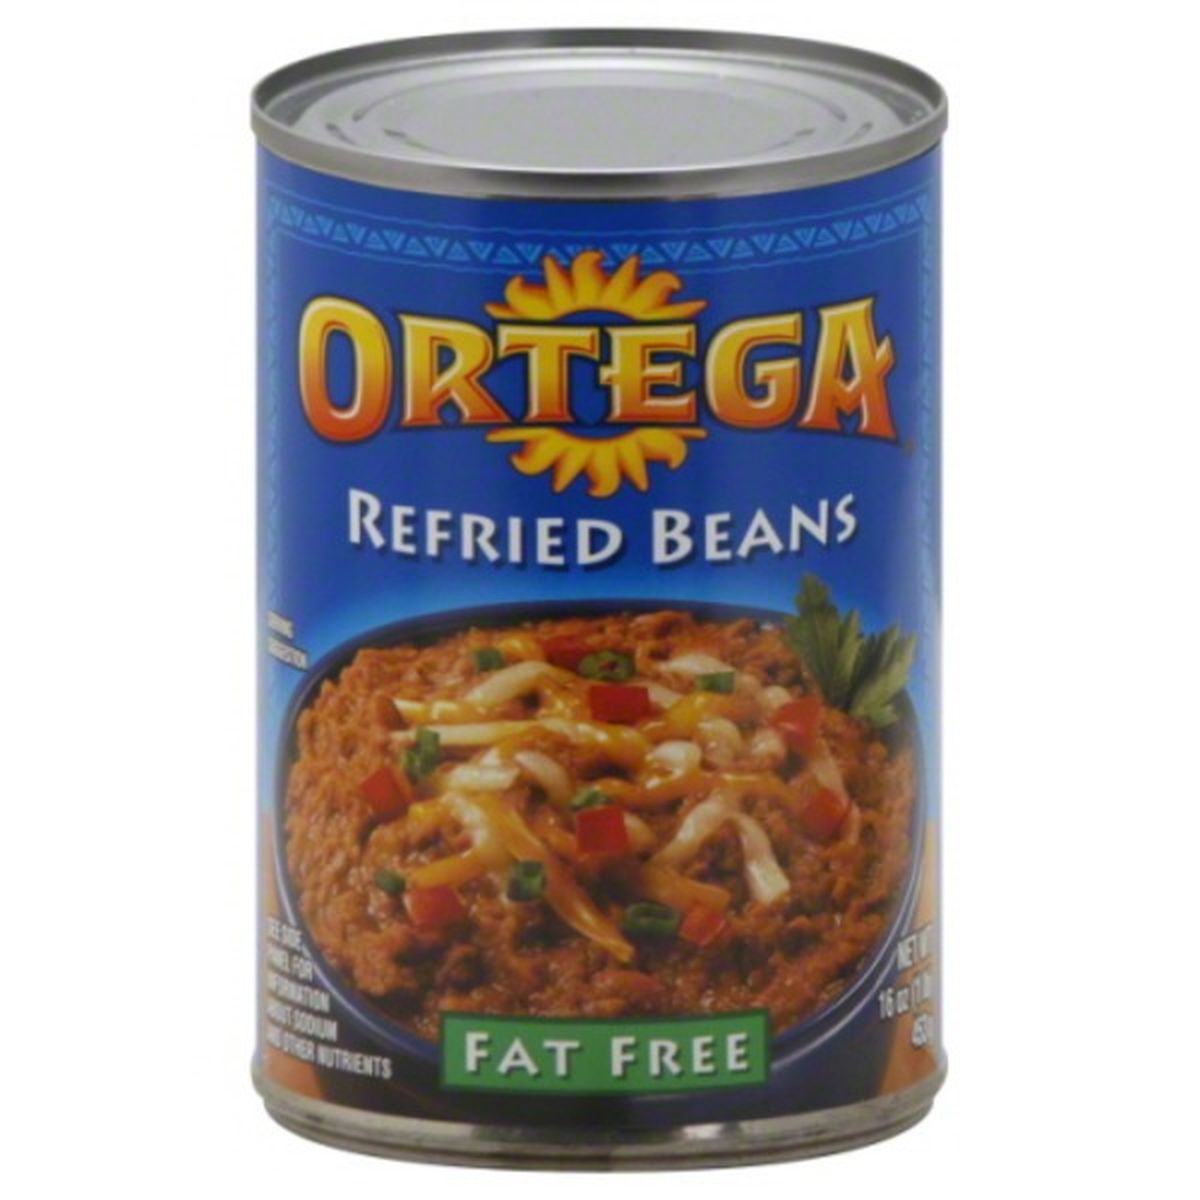 Calories in Ortega Refried Beans, Fat Free